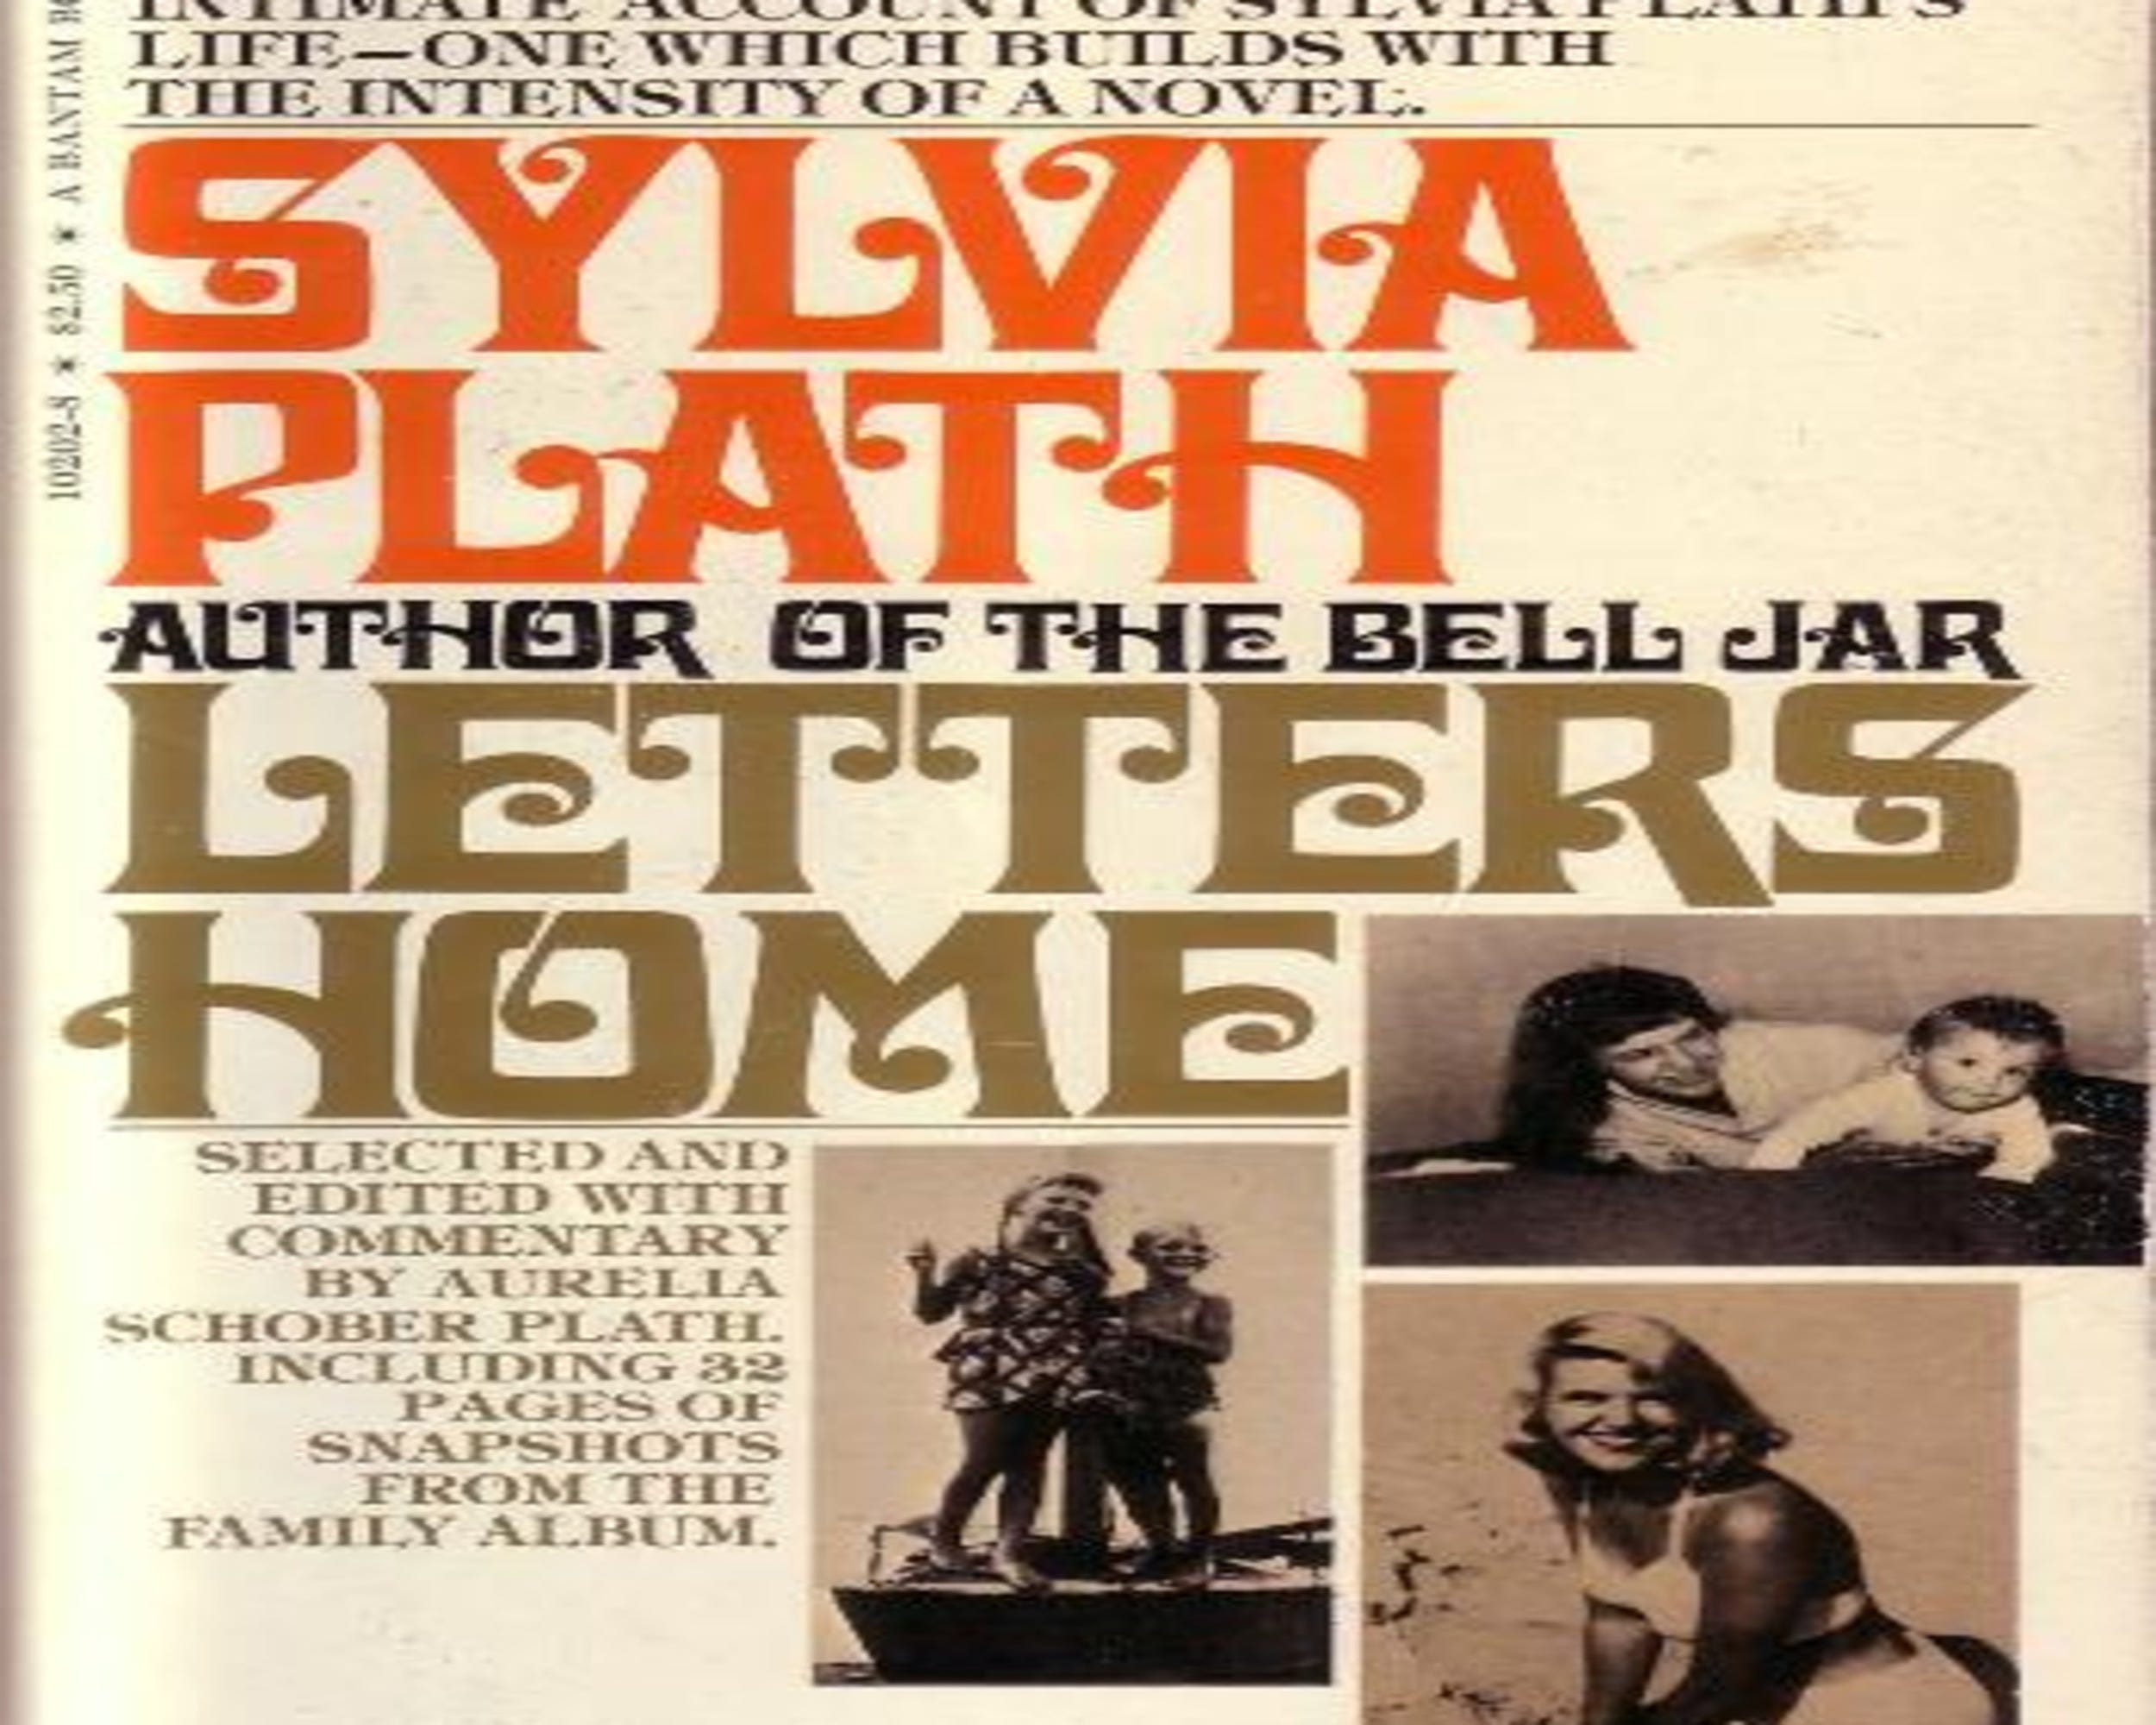 My Selection — The Bell Jar. By Sylvia Plath, by Muhammad Nasrullah Khan, My Selection